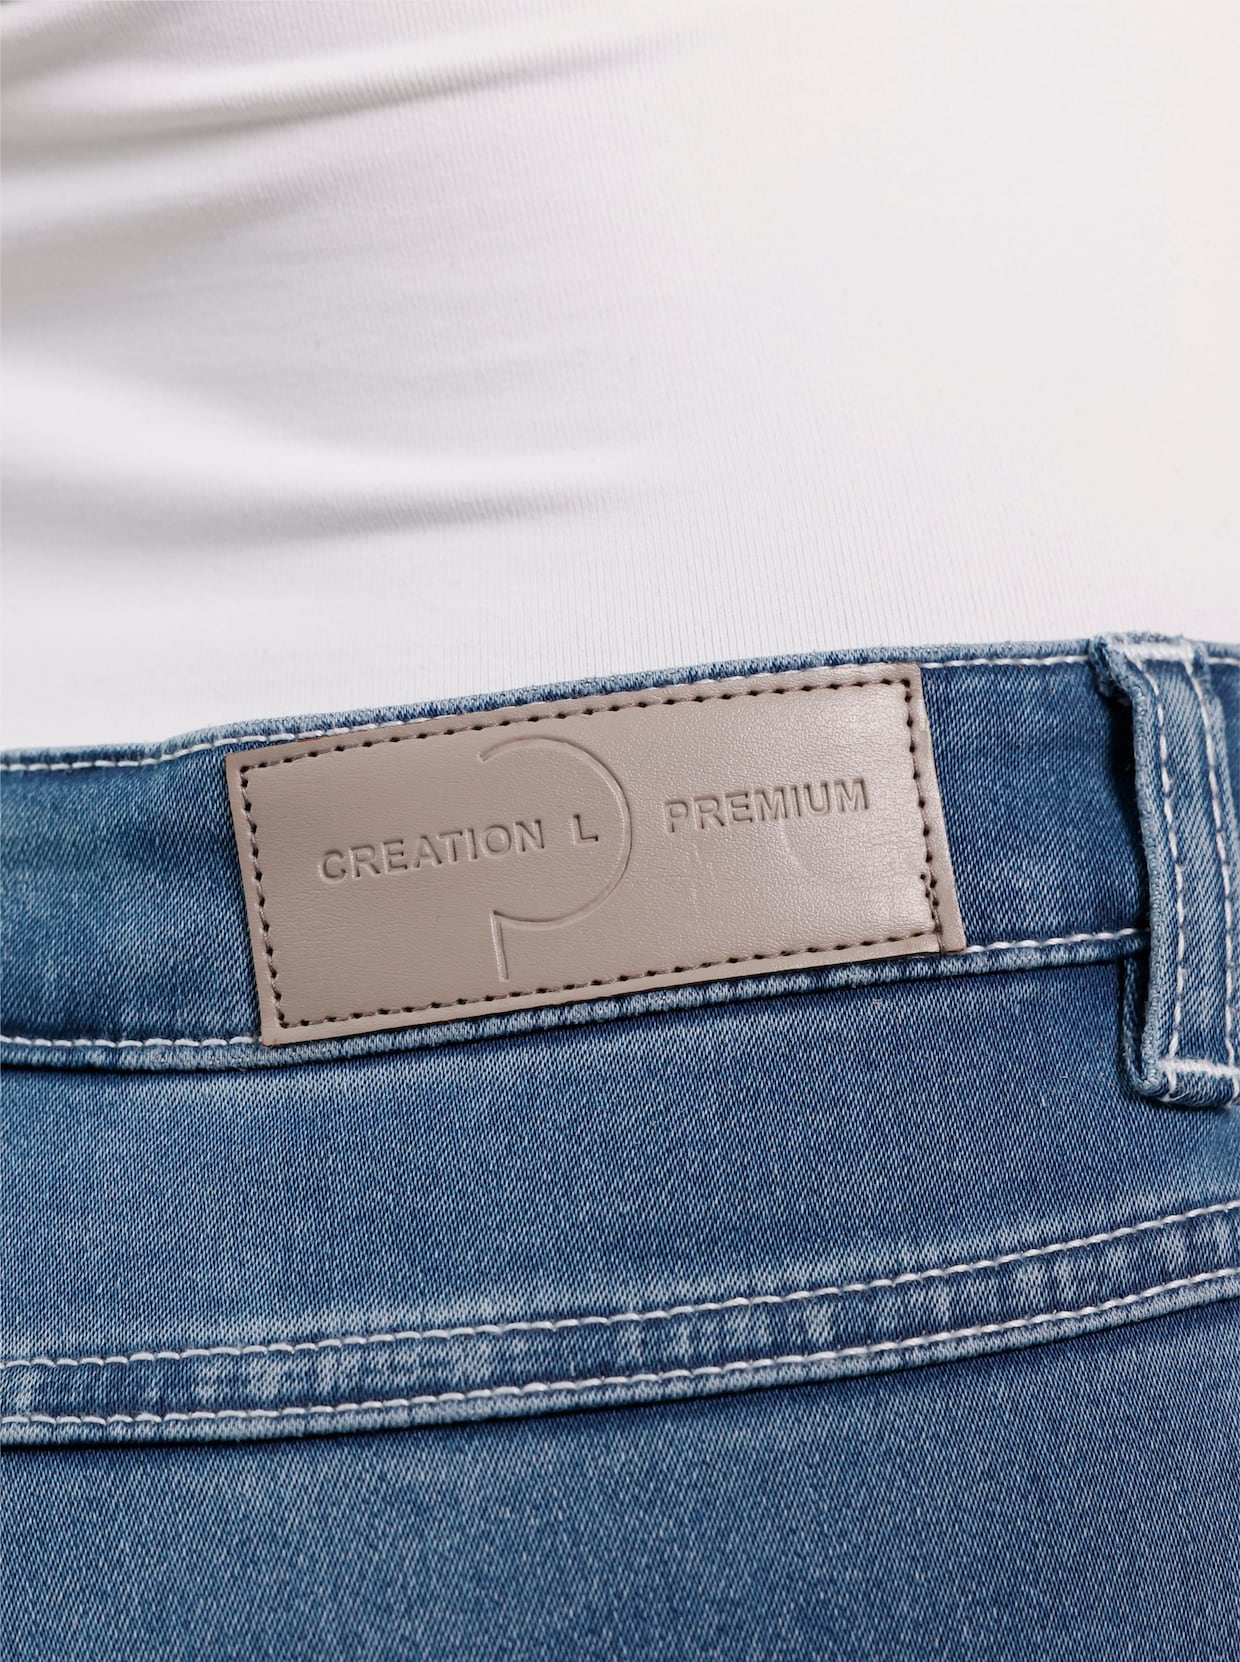 CREATION L PREMIUM Modal-Baumwoll-7/8-Jeans - blue-bleached